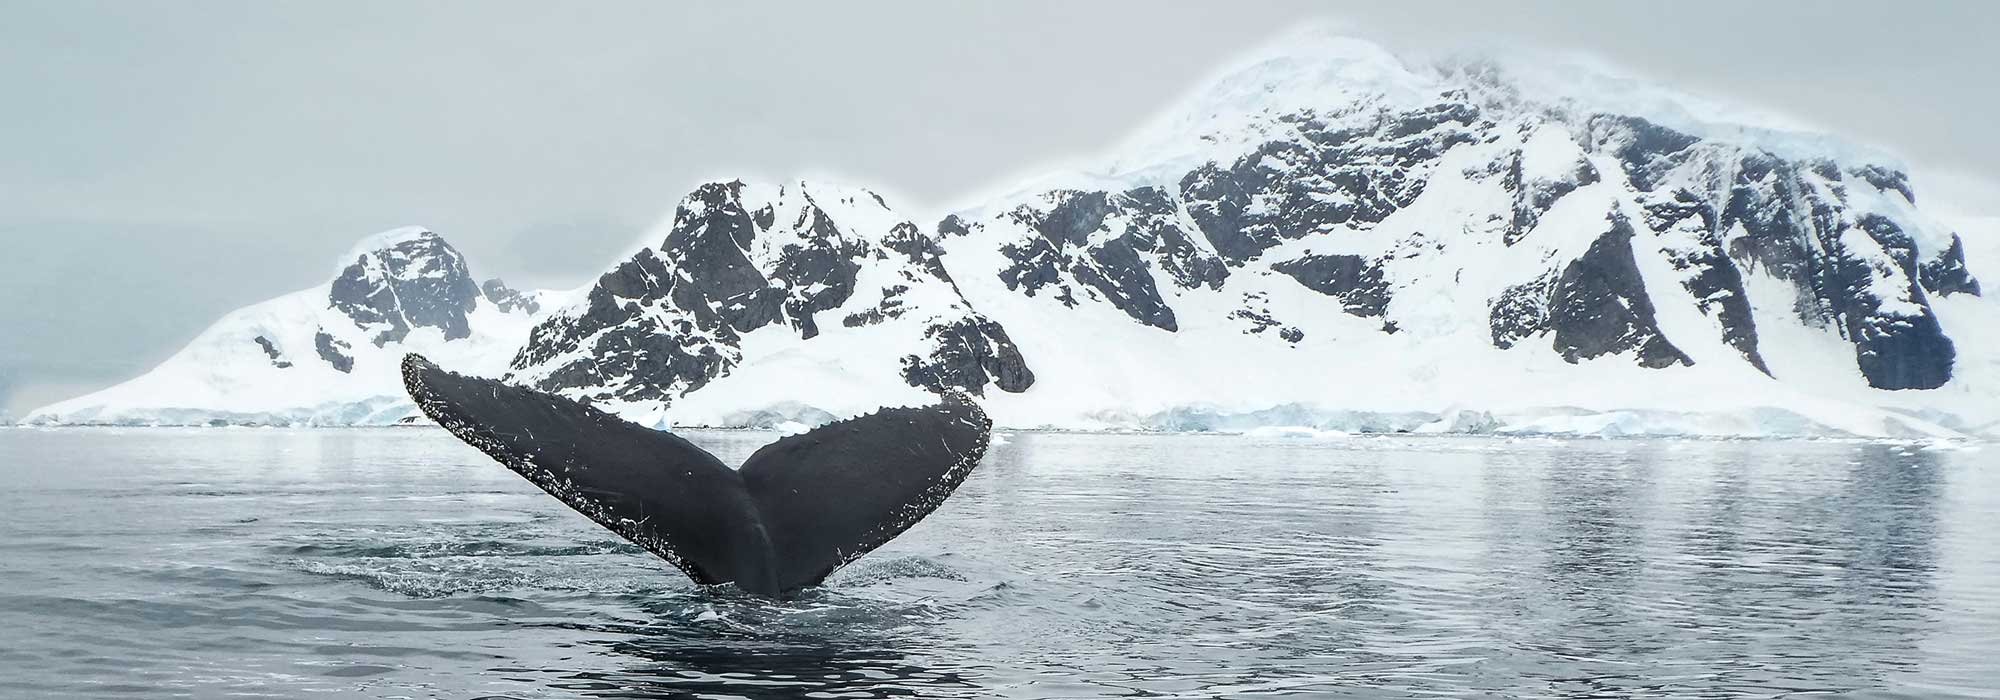 Queue de baleine, l'antarctique 